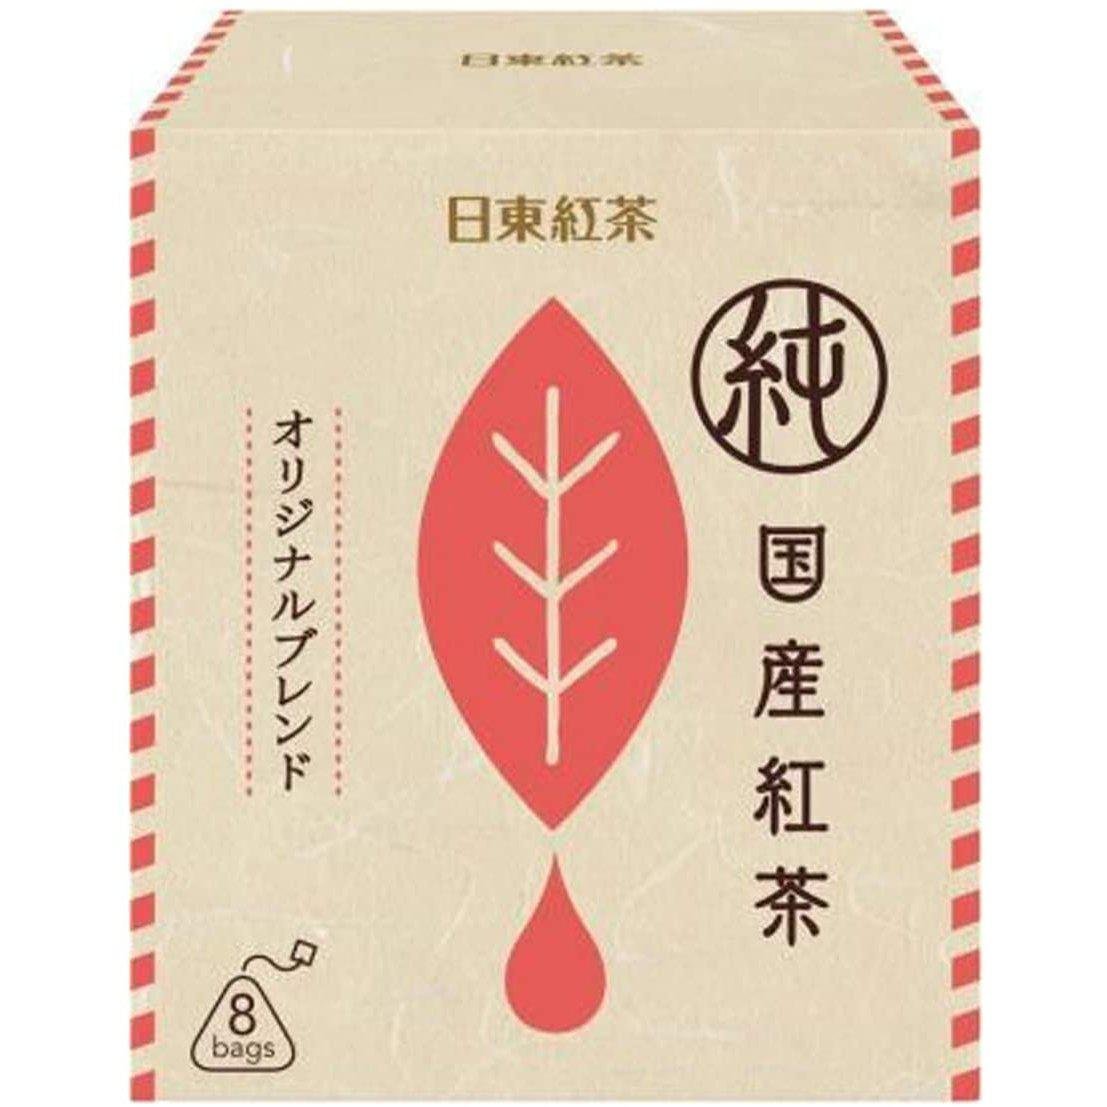 Nittoh Kocha Pure Japanese Black Tea Original Blend 8 Tea Bags